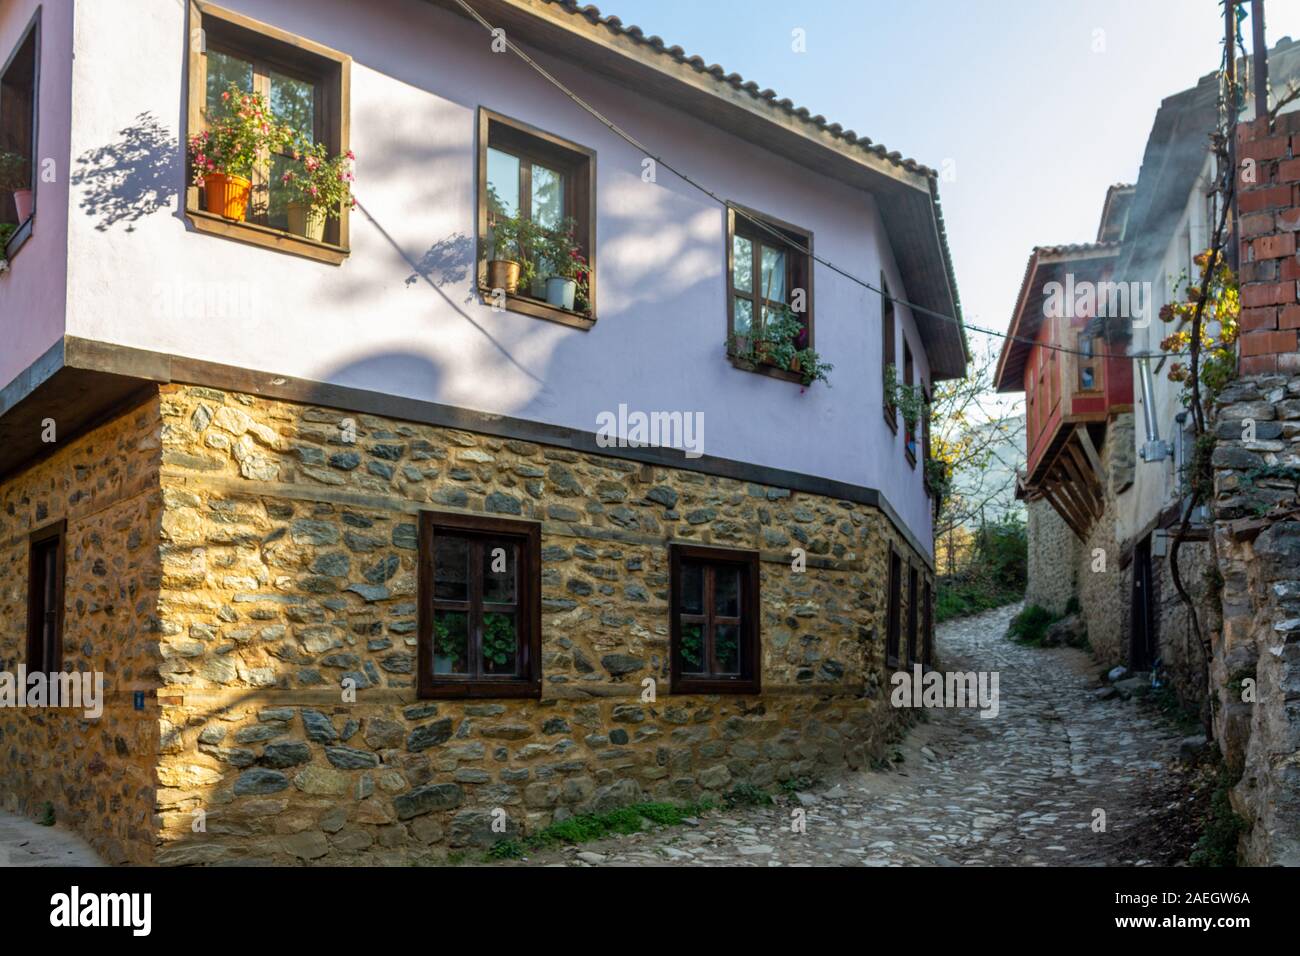 Dorf Cumalikizik, Bursa/Türkei - vom 19. November 2019: Der Bursa historischen osmanischen Dorf. Cumalikizik UNESCO Weltkulturerbe ist. Stockfoto